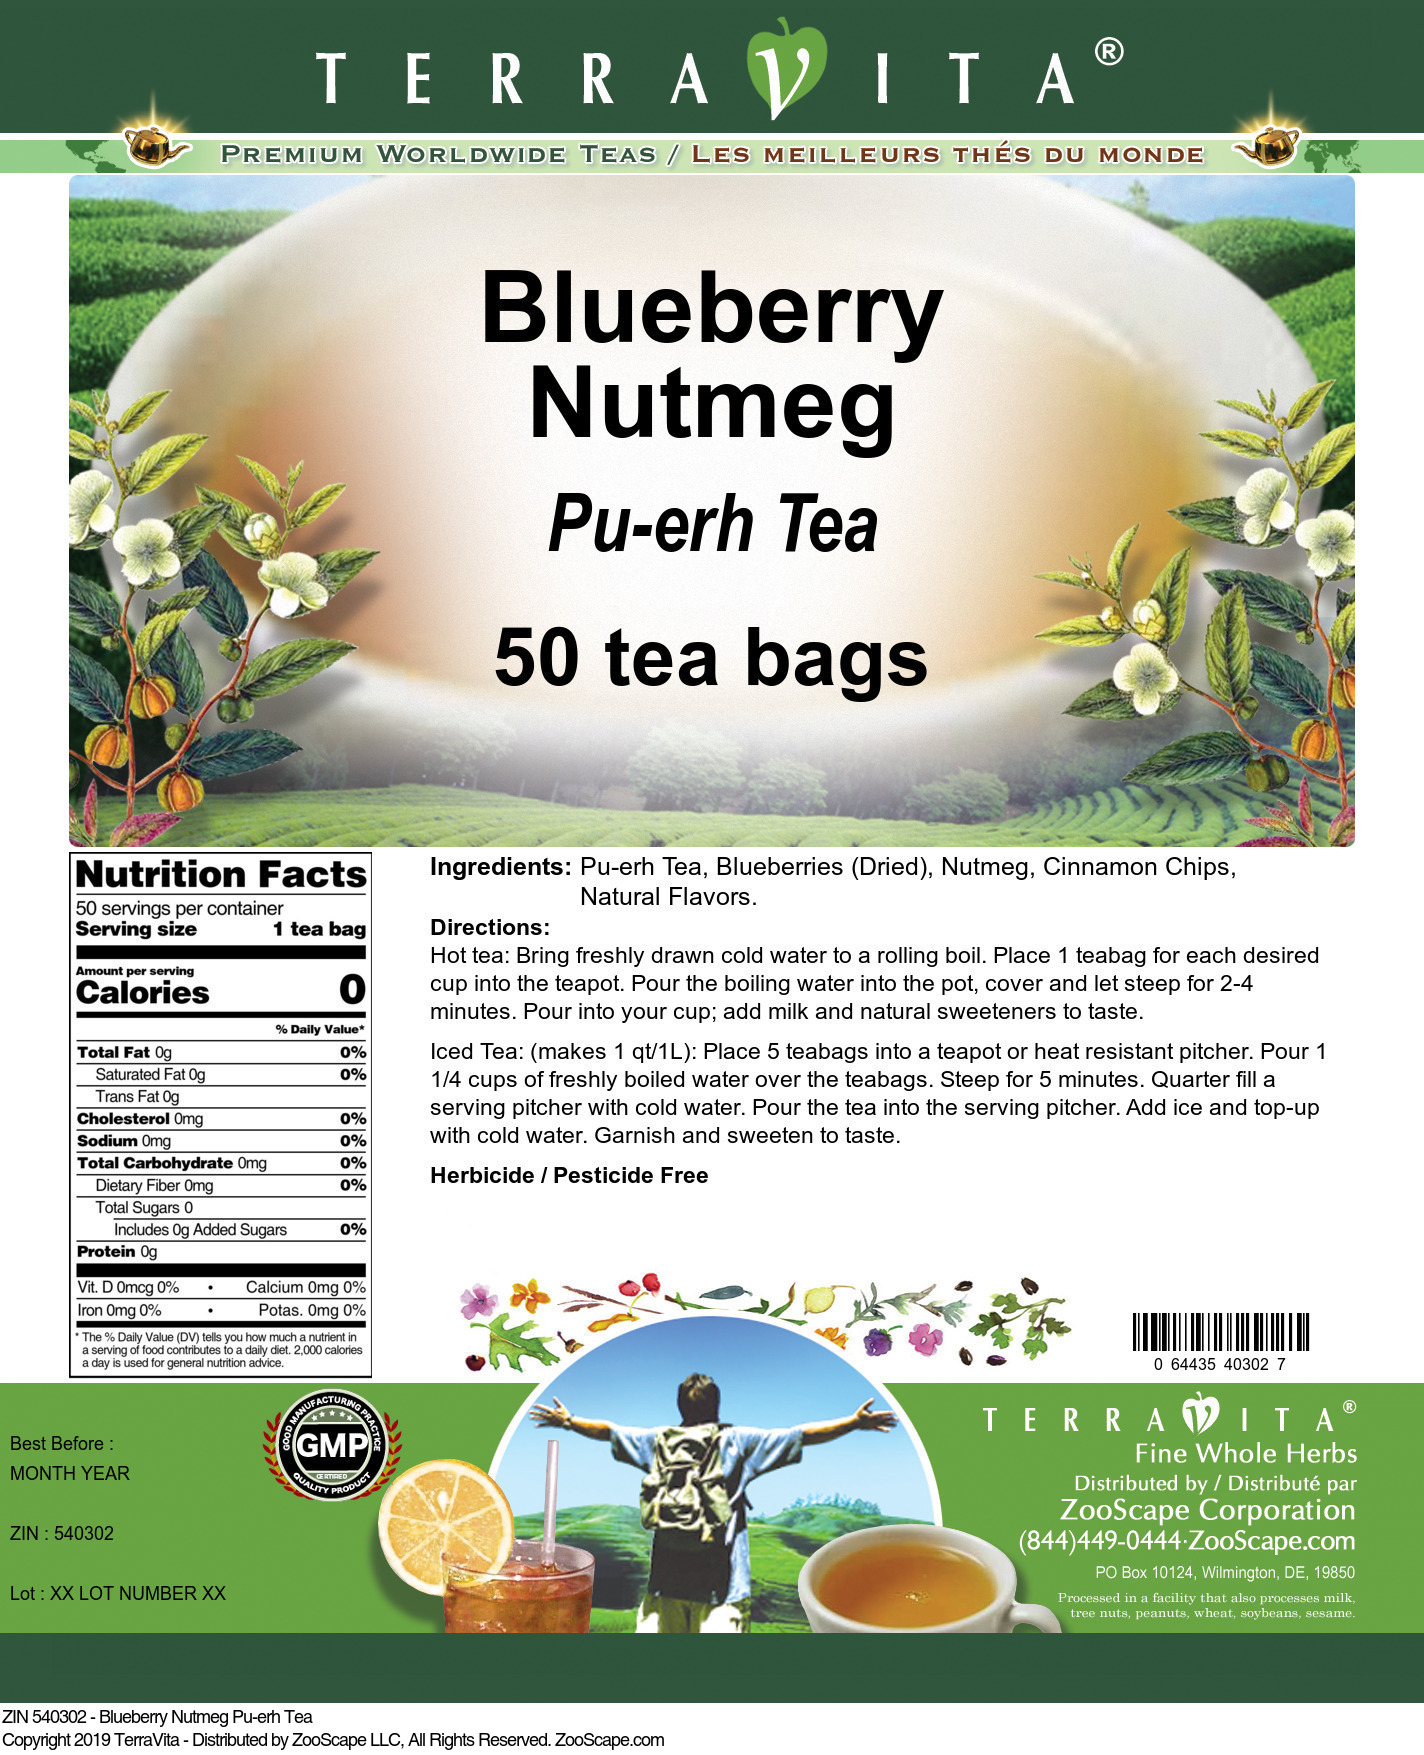 Blueberry Nutmeg Pu-erh Tea - Label